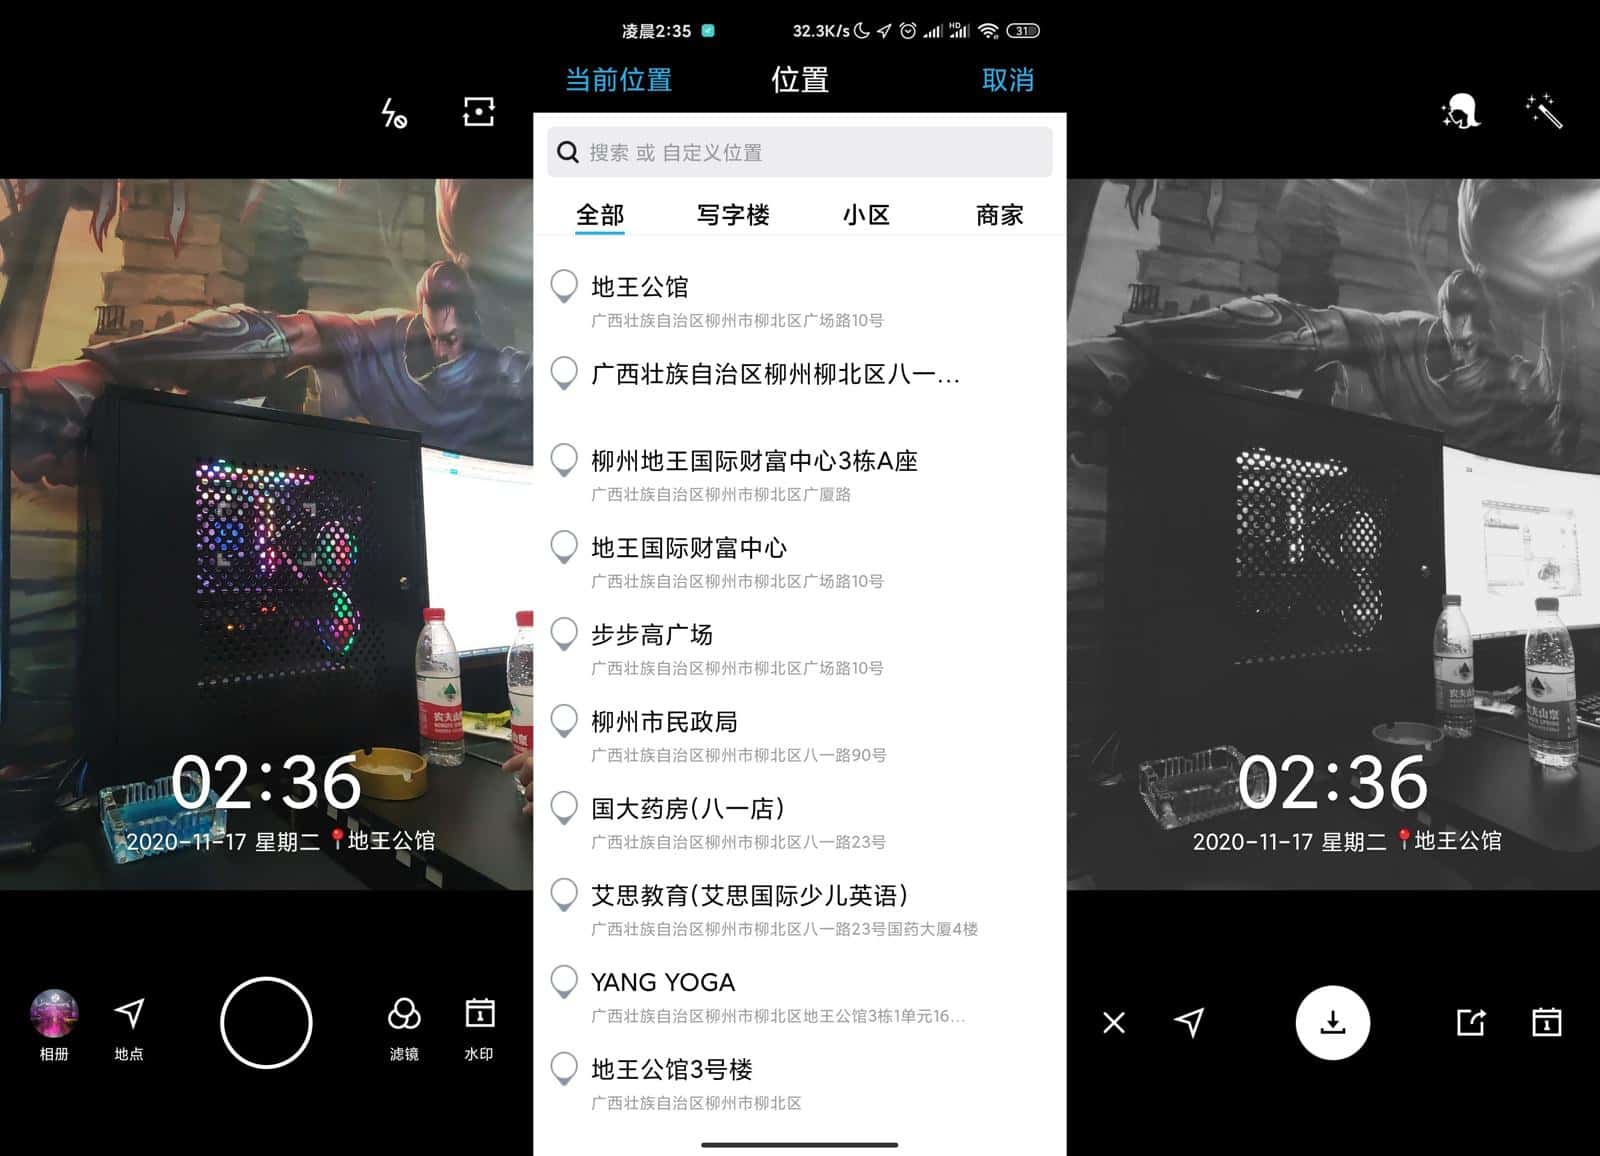 Android 水印相机 v3.8.81.519 去除广告纯净版-乐宝库